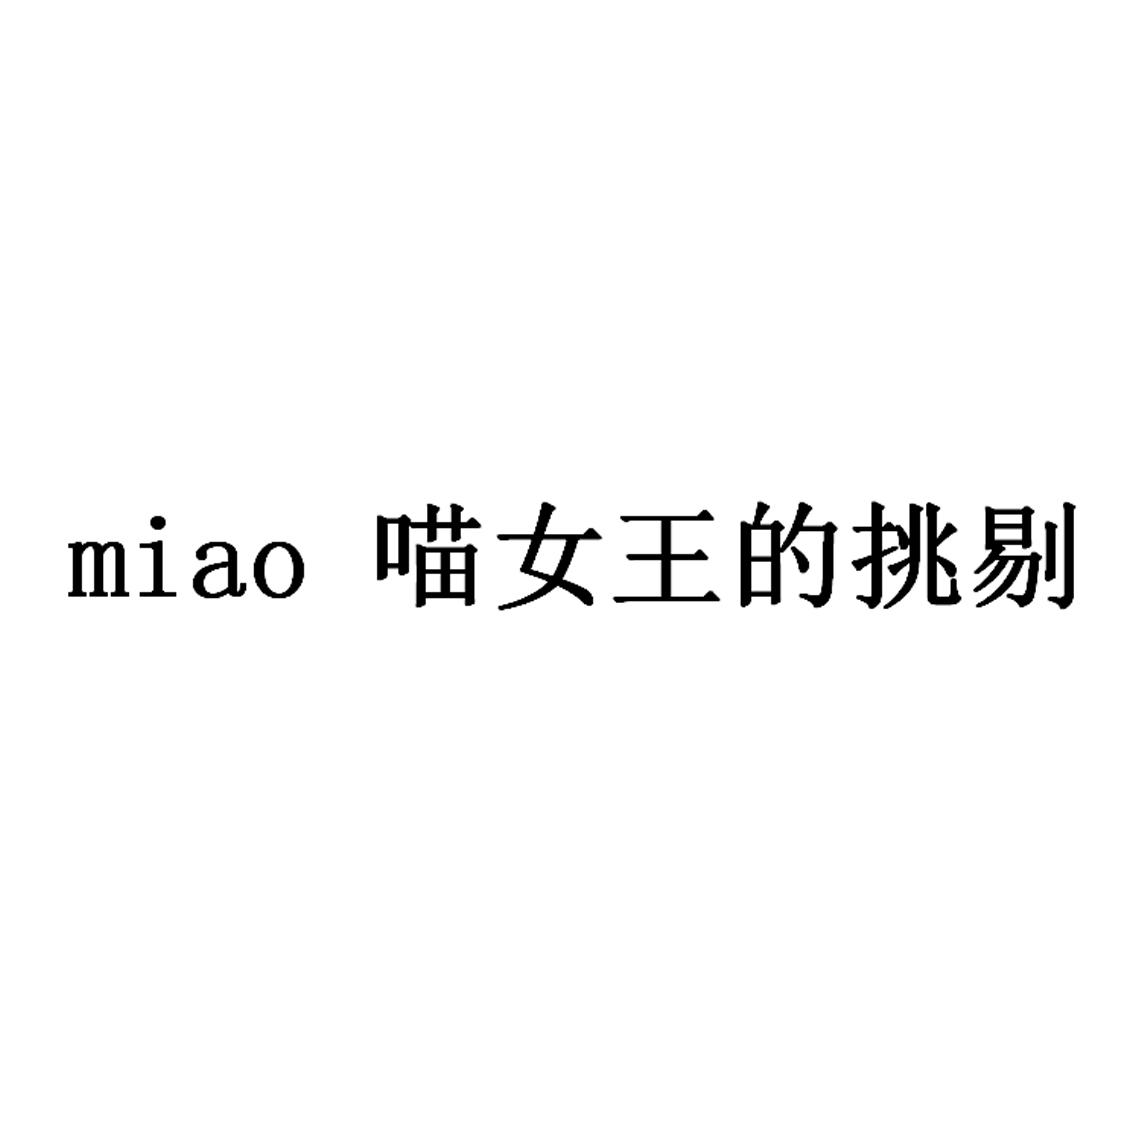 MIAO 喵女王的挑剔logo